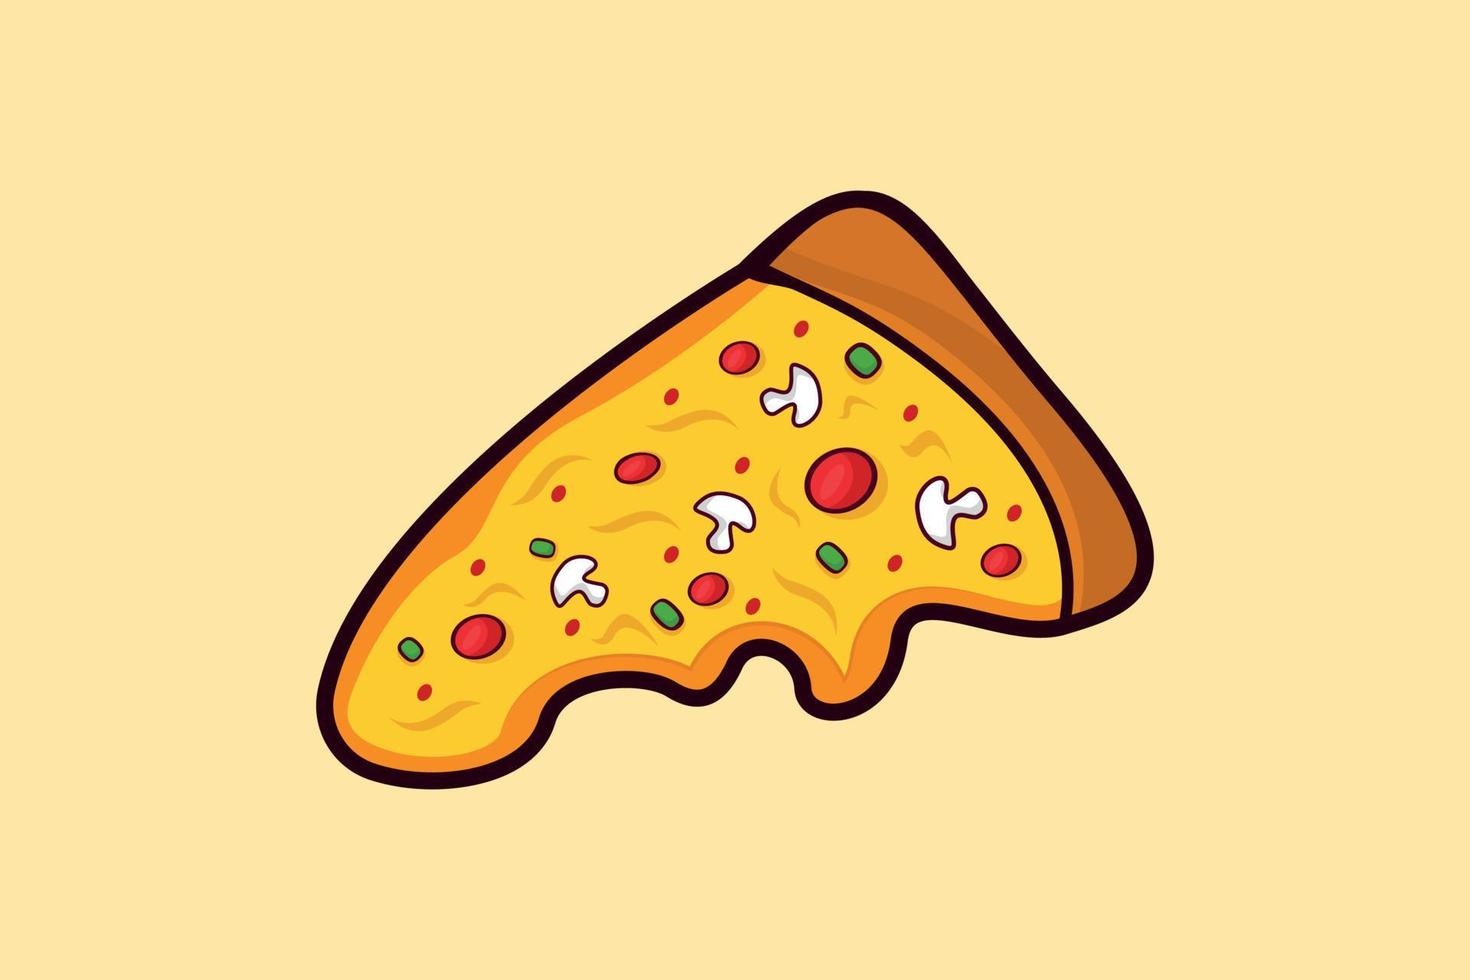 Pizza Slice Cartoon Style Illustration Design vector